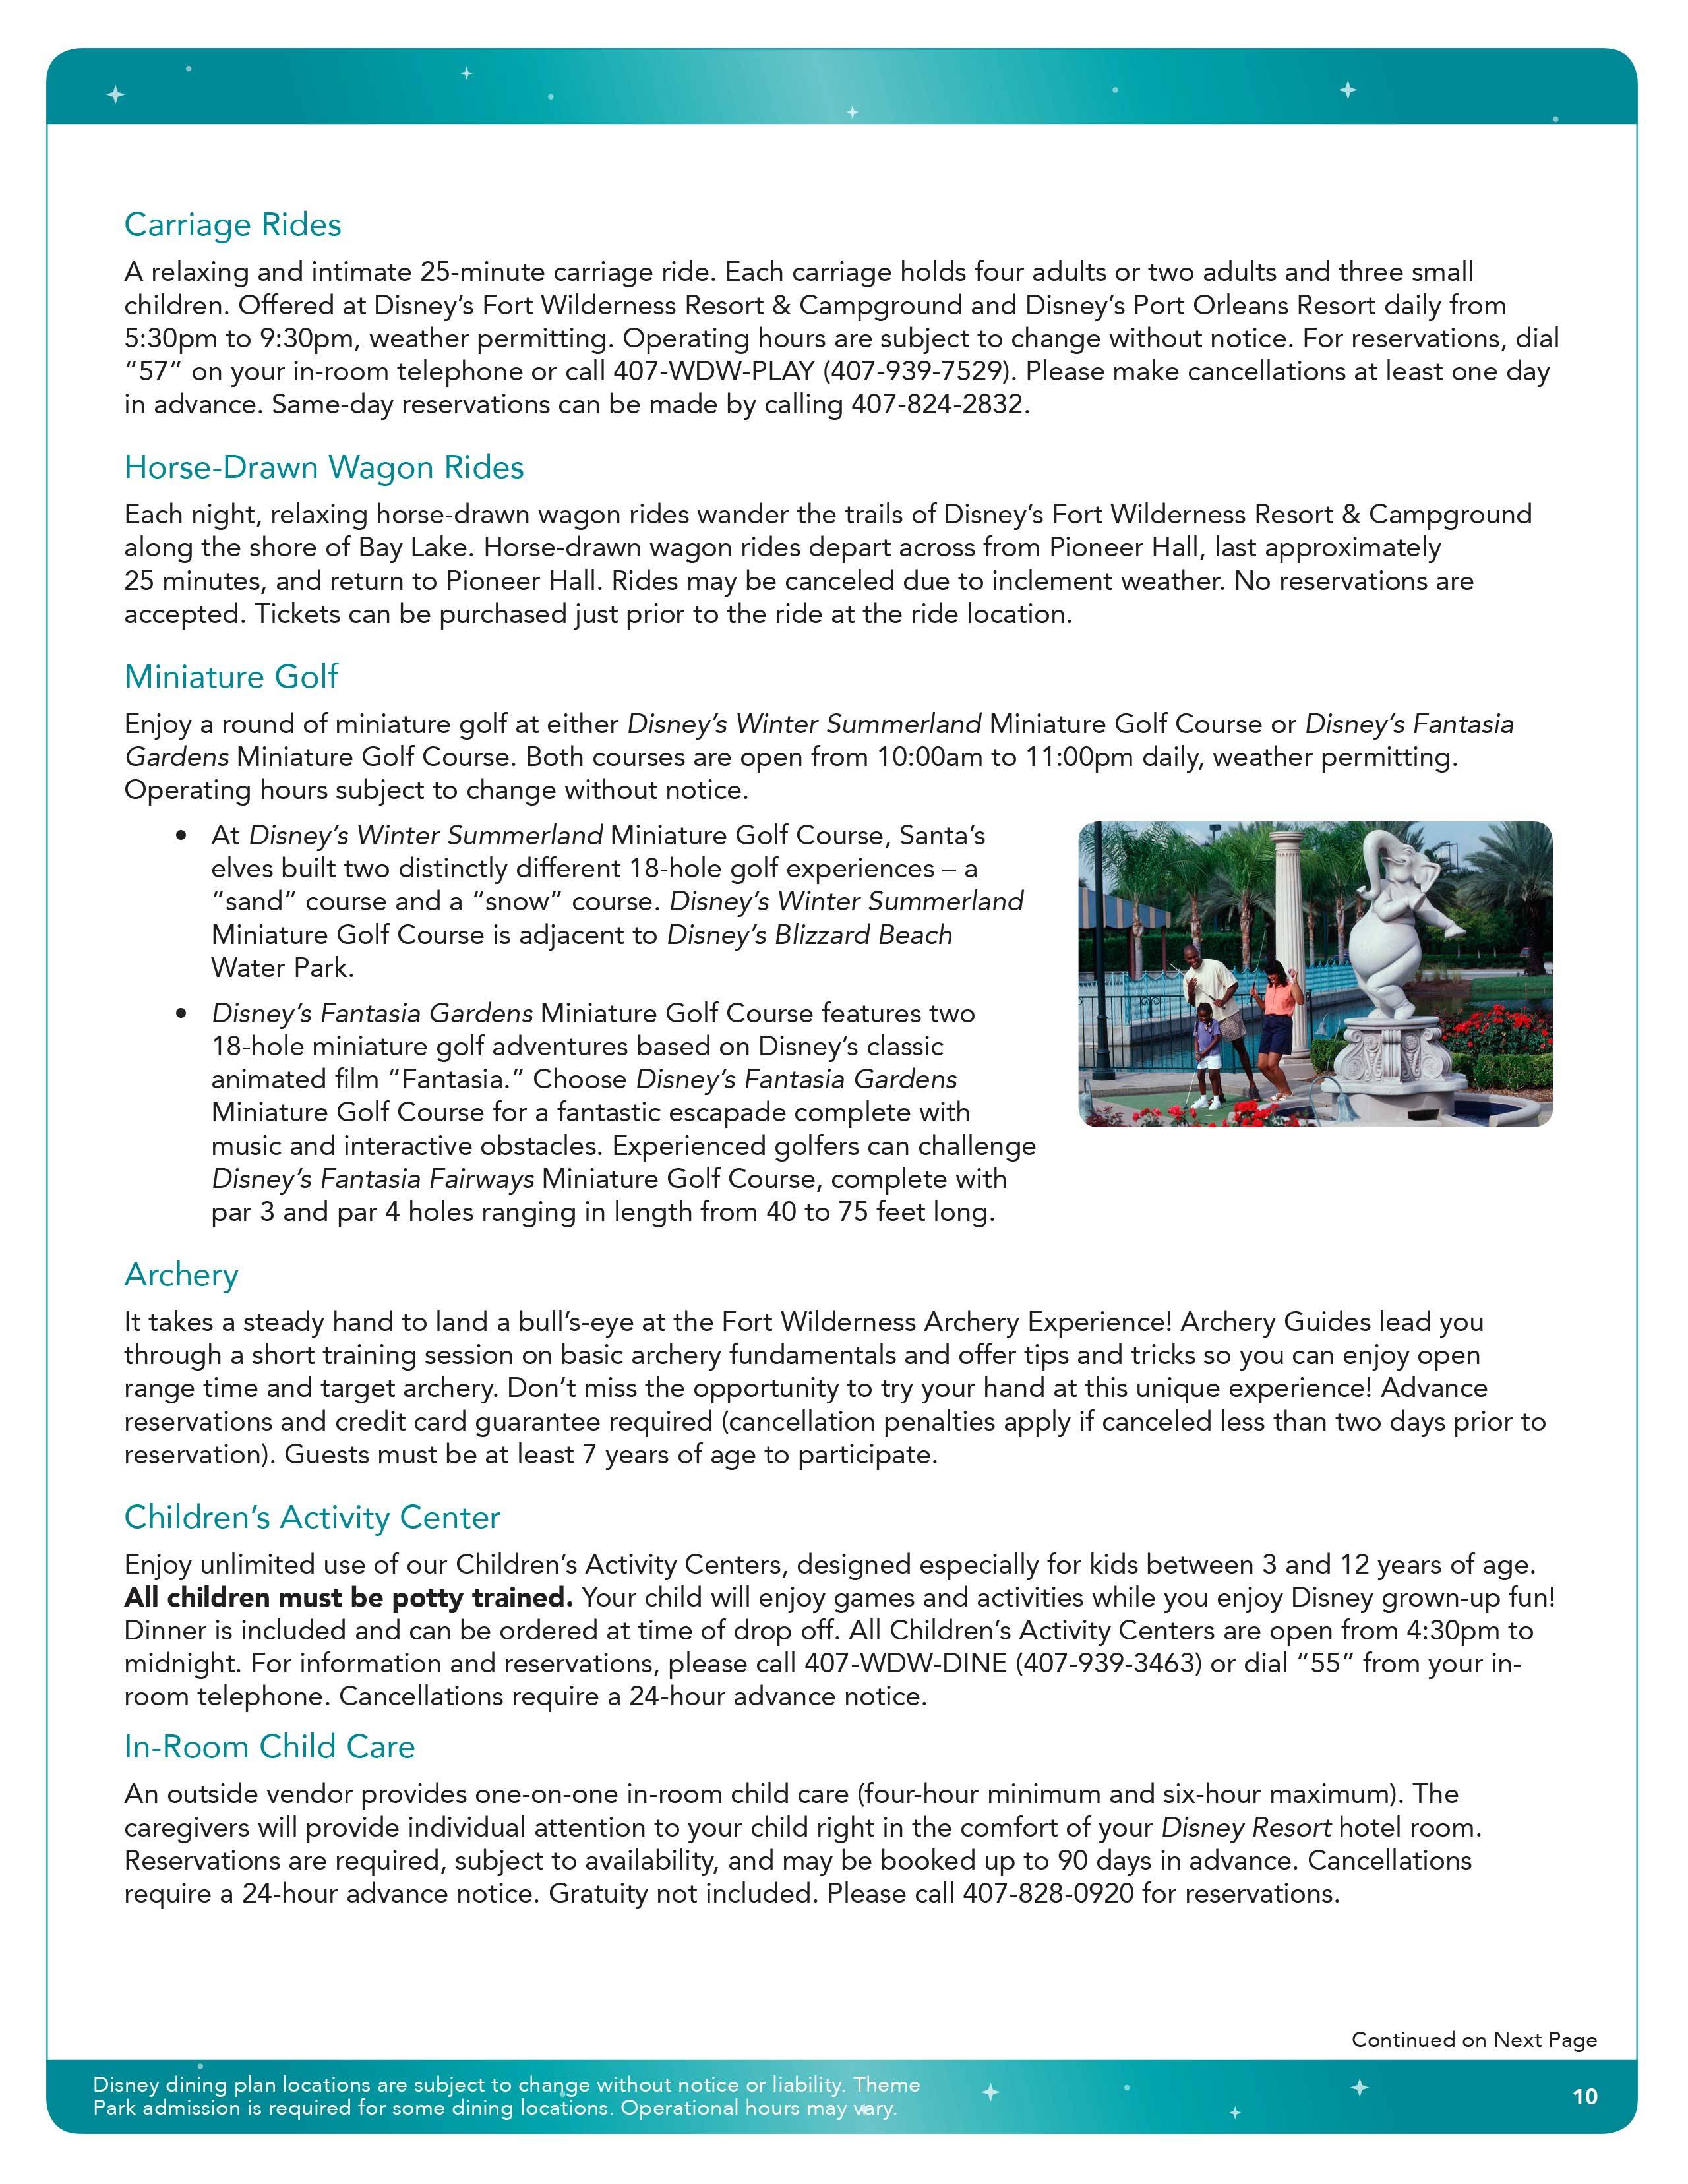 2016 Disney Platinum Dining Plan brochure - Page 2